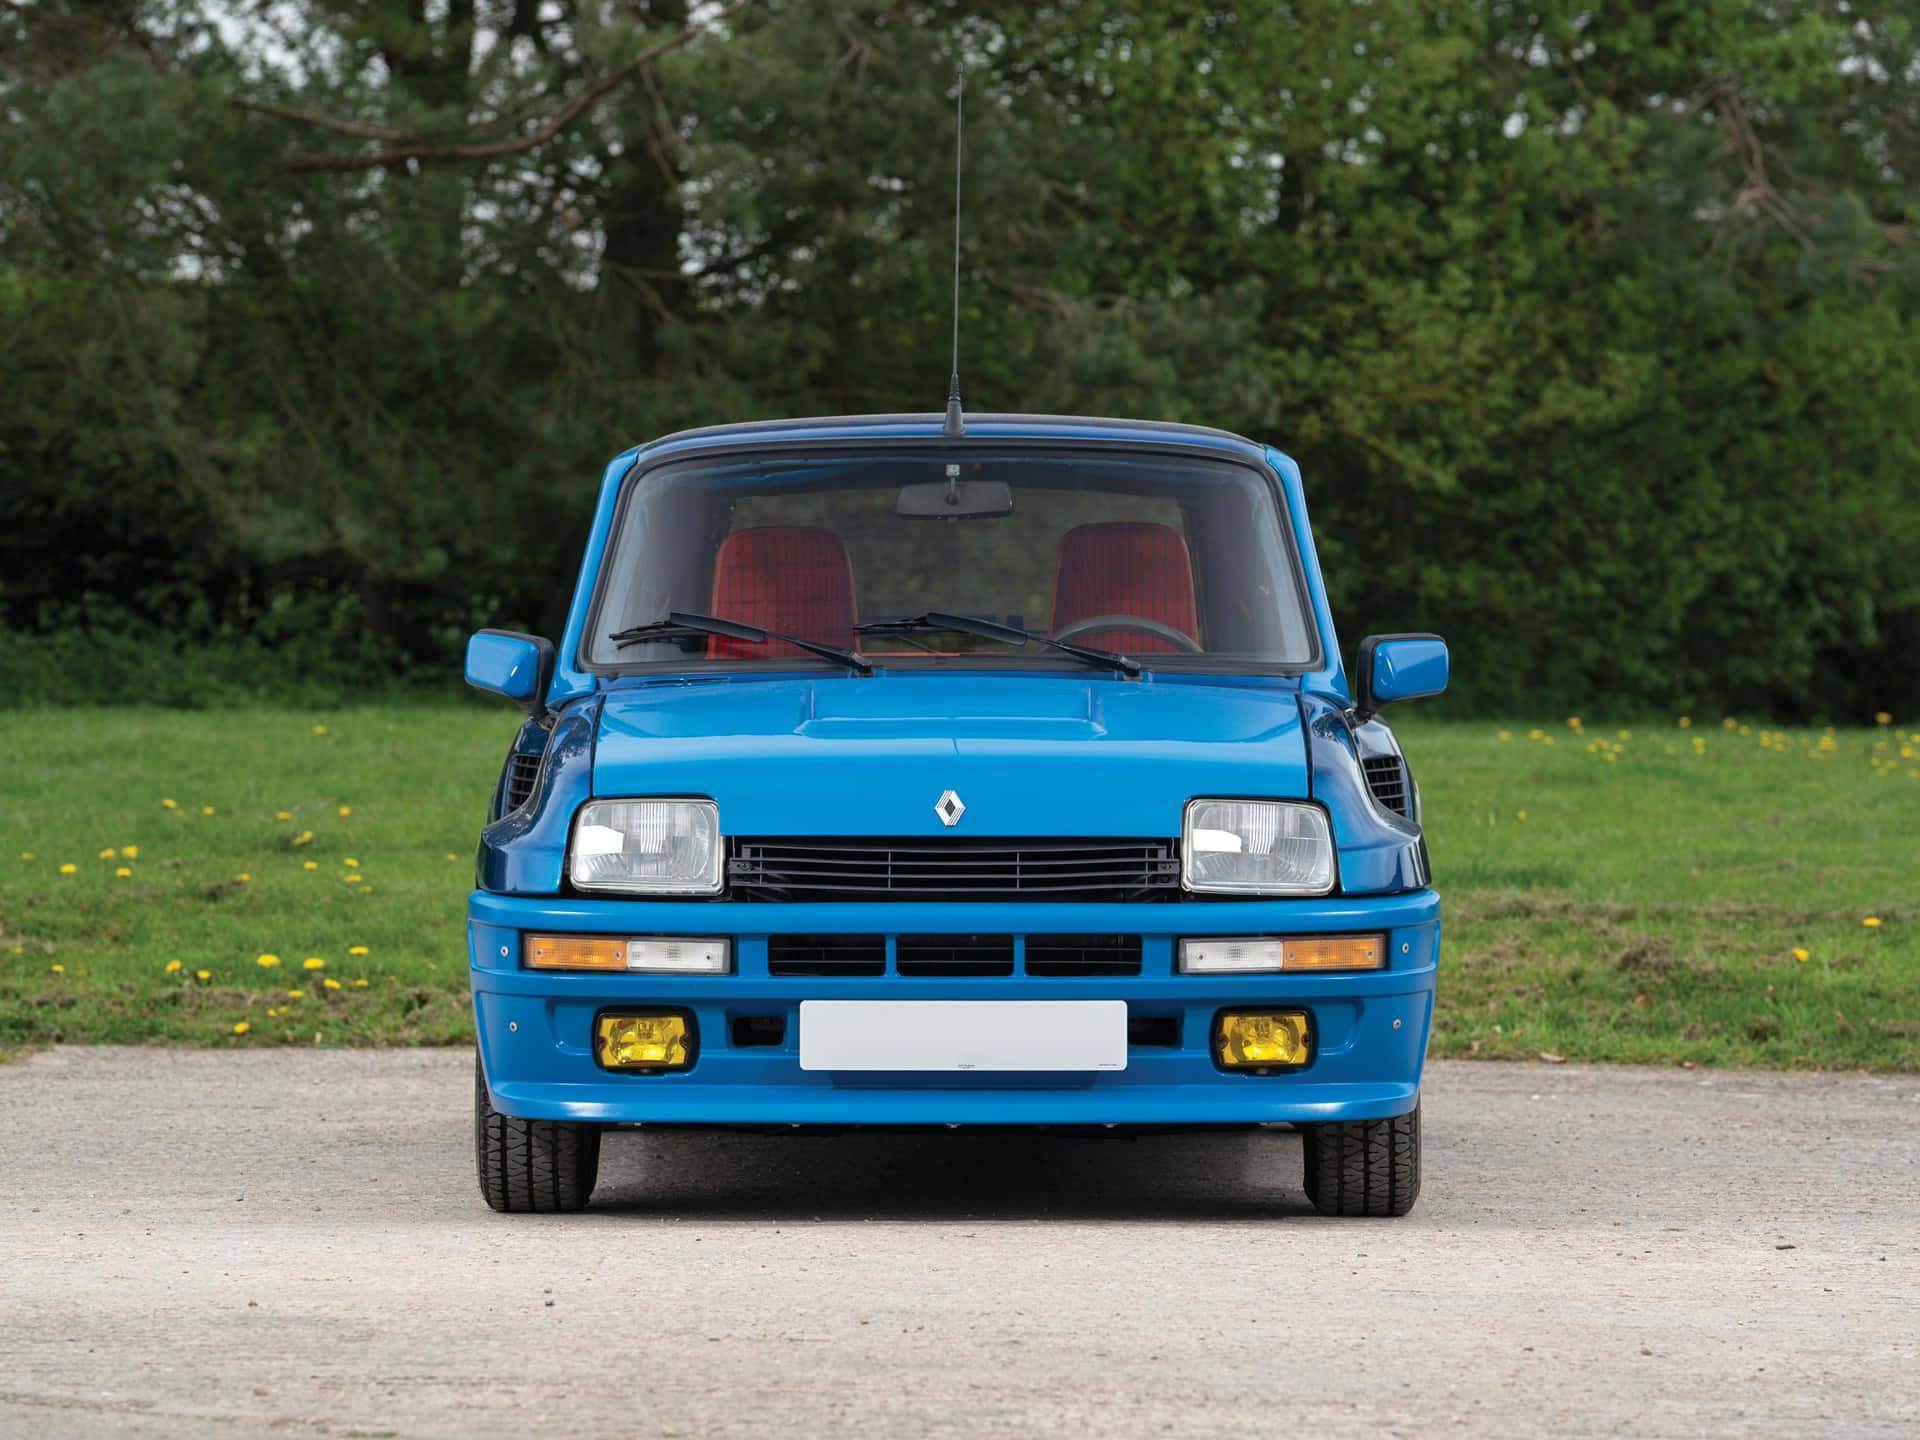 Stunning Renault 5 Turbo in action Wallpaper